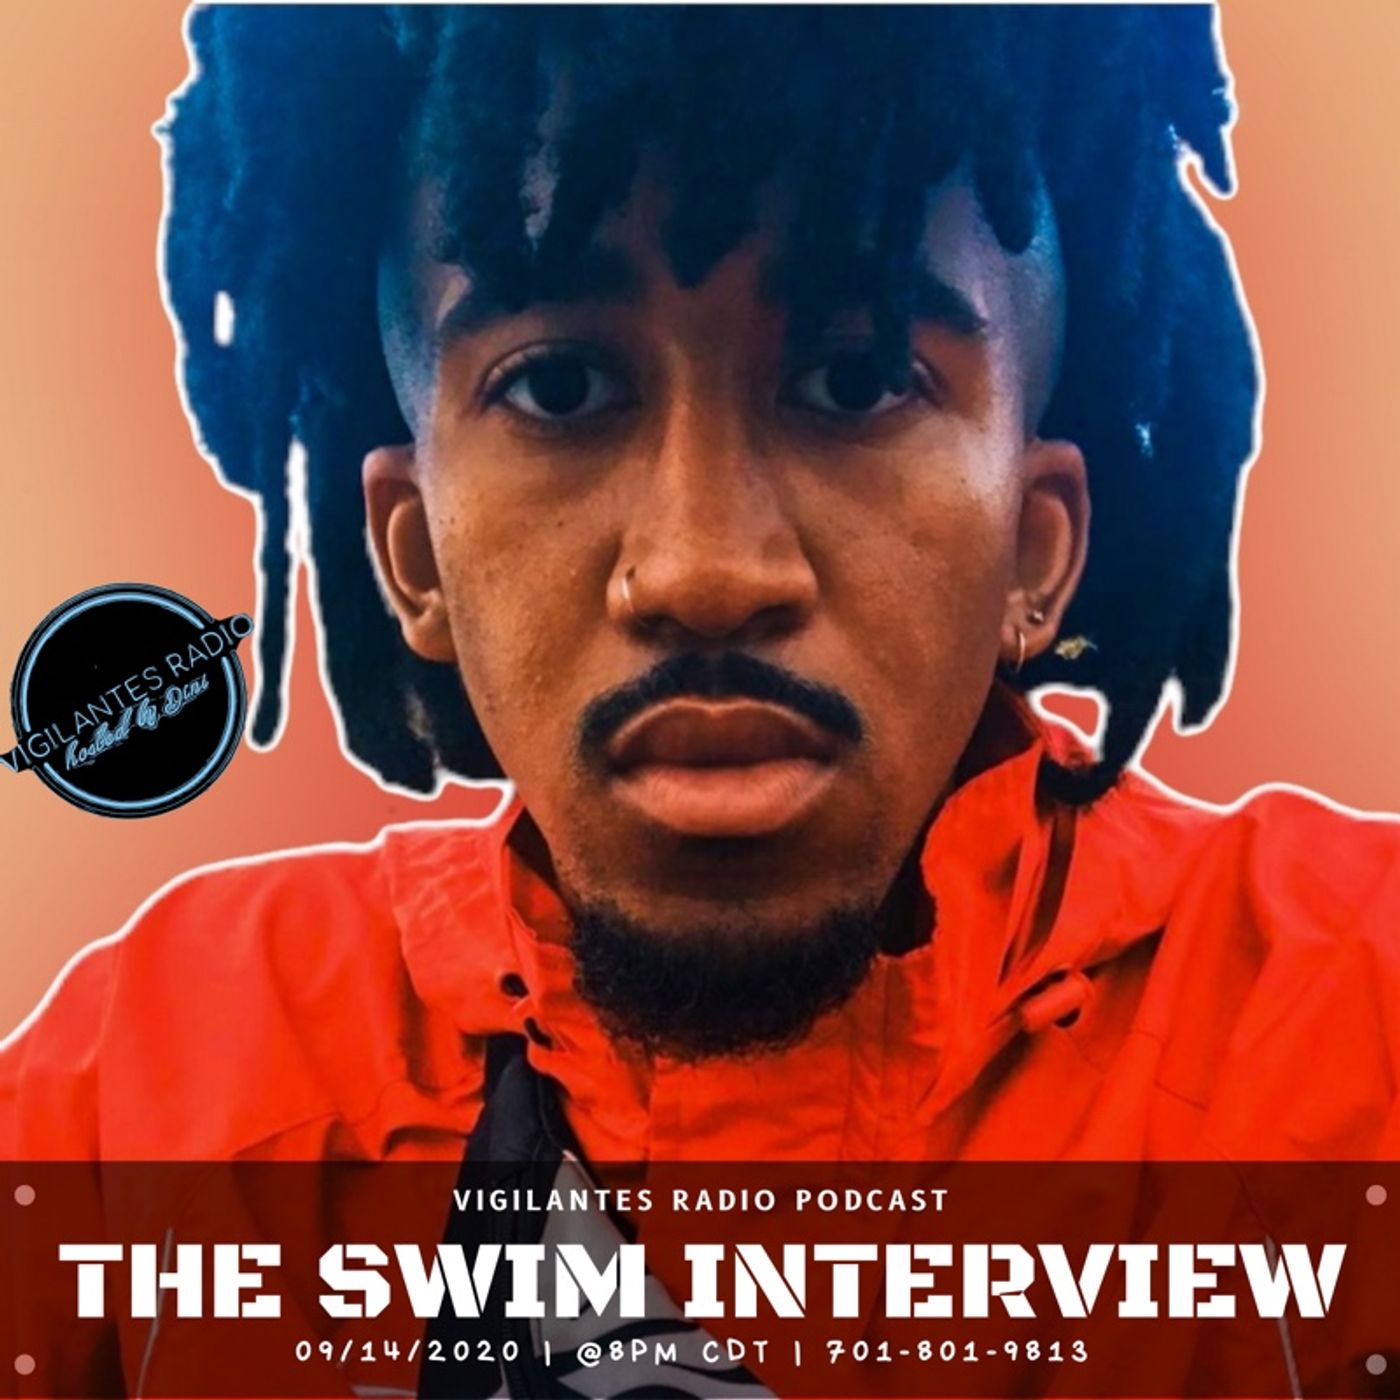 The Swim Interview. Image